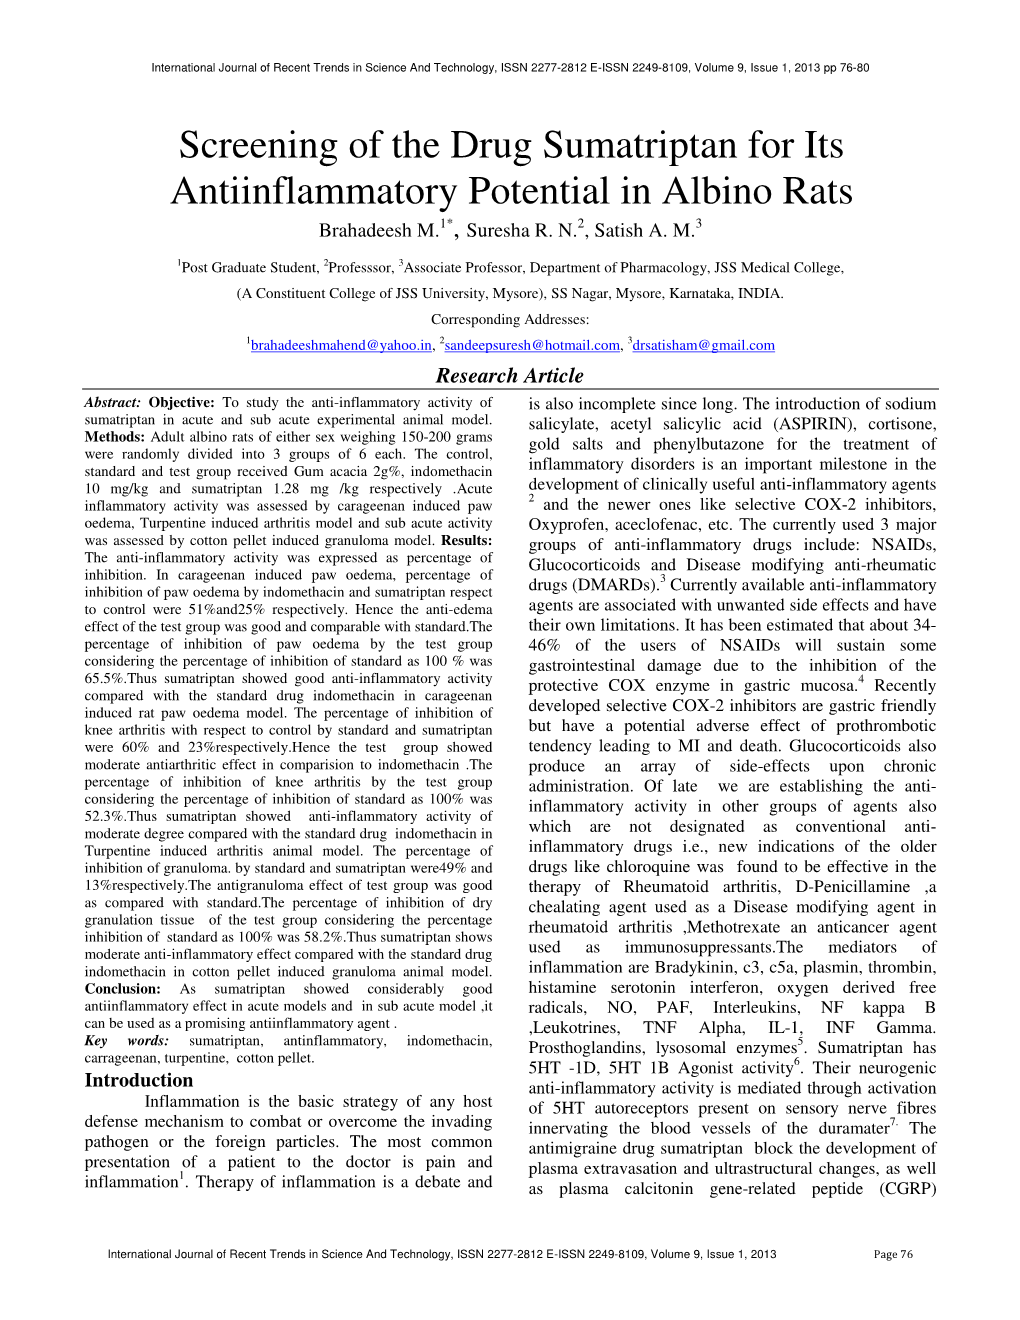 Screening of the Drug Sumatriptan for Its Antiinflammatory Potential in Albino Rats Brahadeesh M.1* , Suresha R